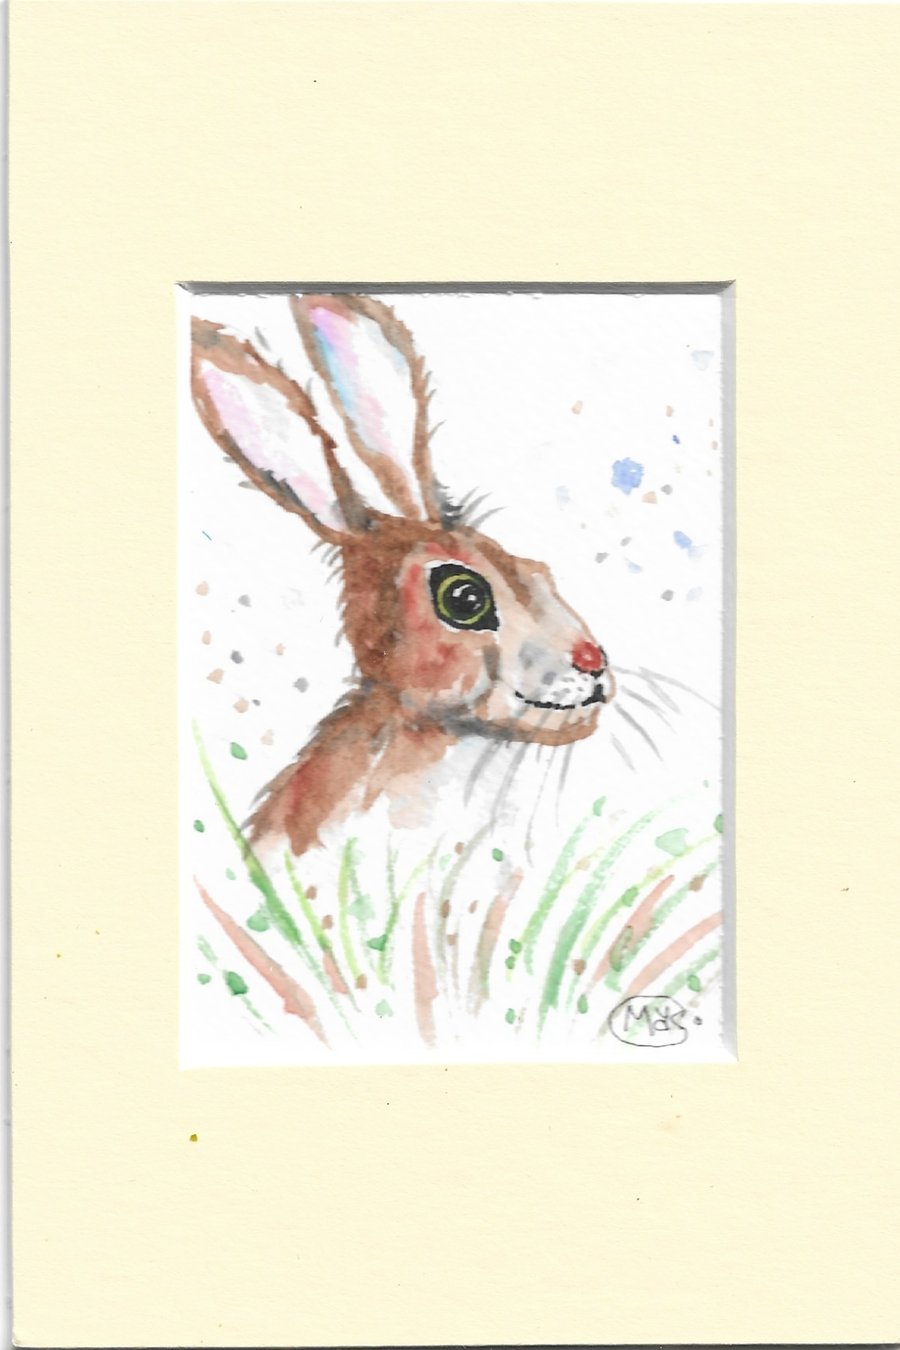  Hare miniature ACEO Original Painting